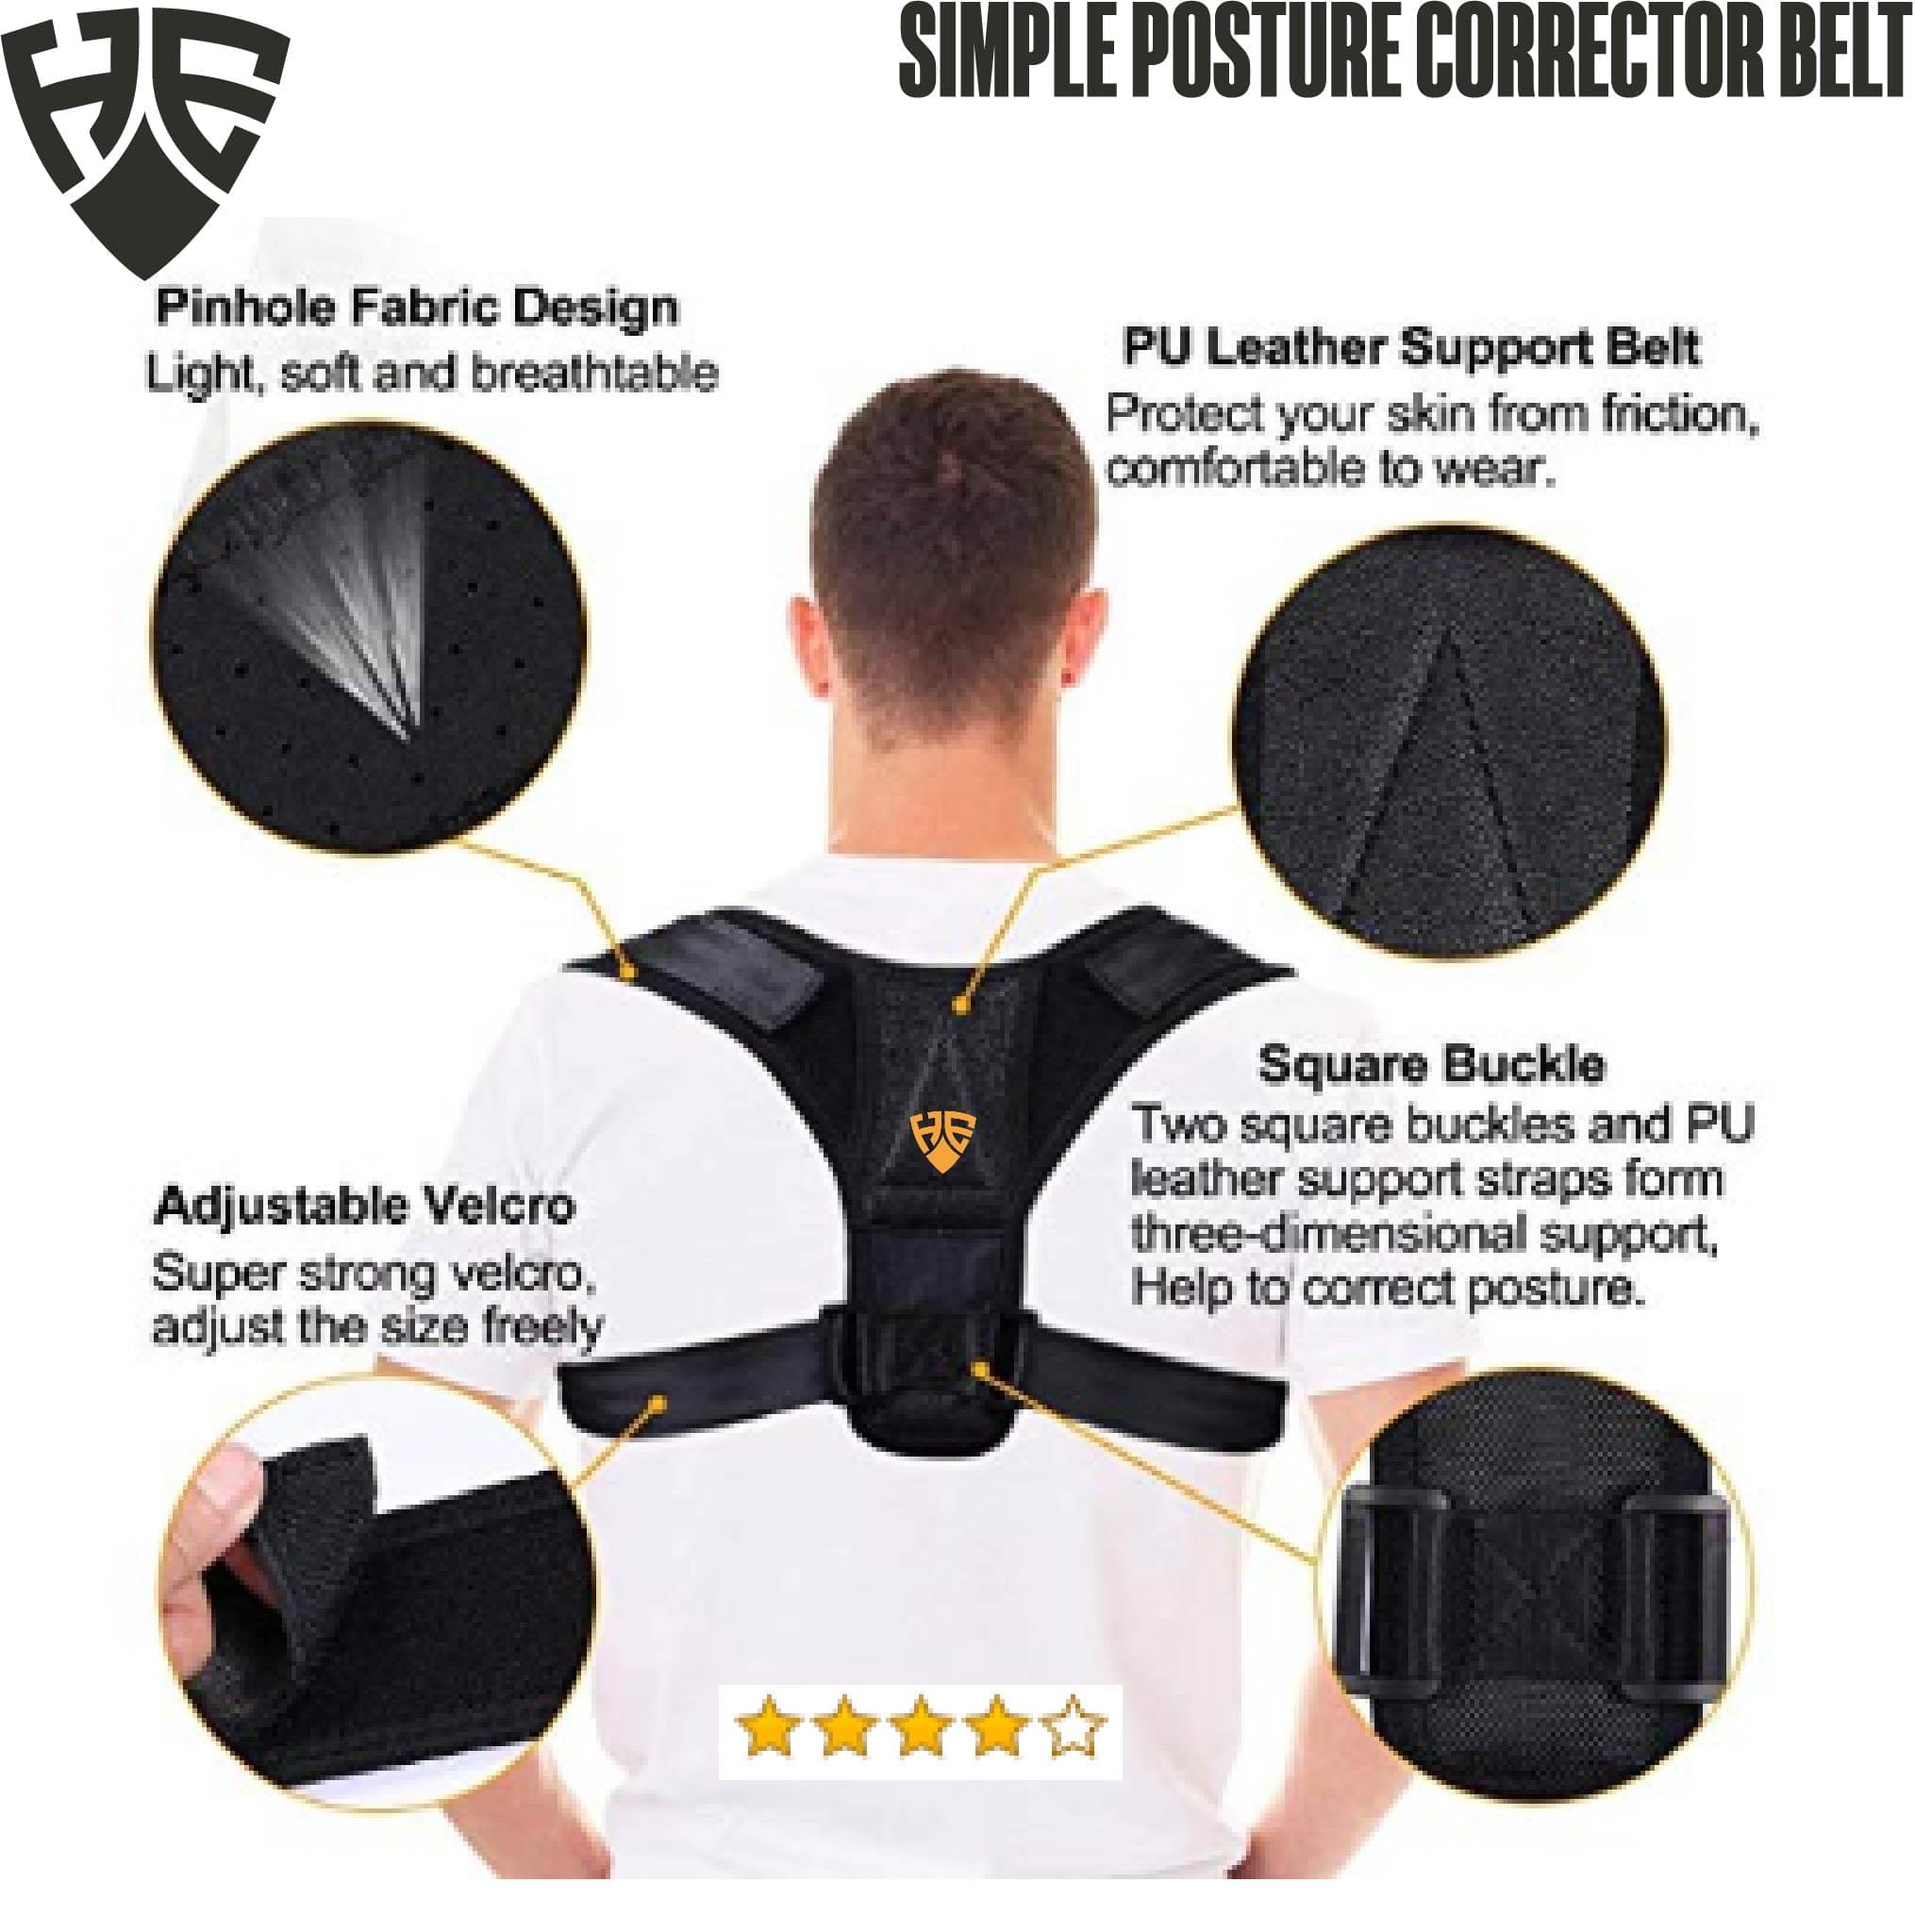 Simple Posture Corrector Belt